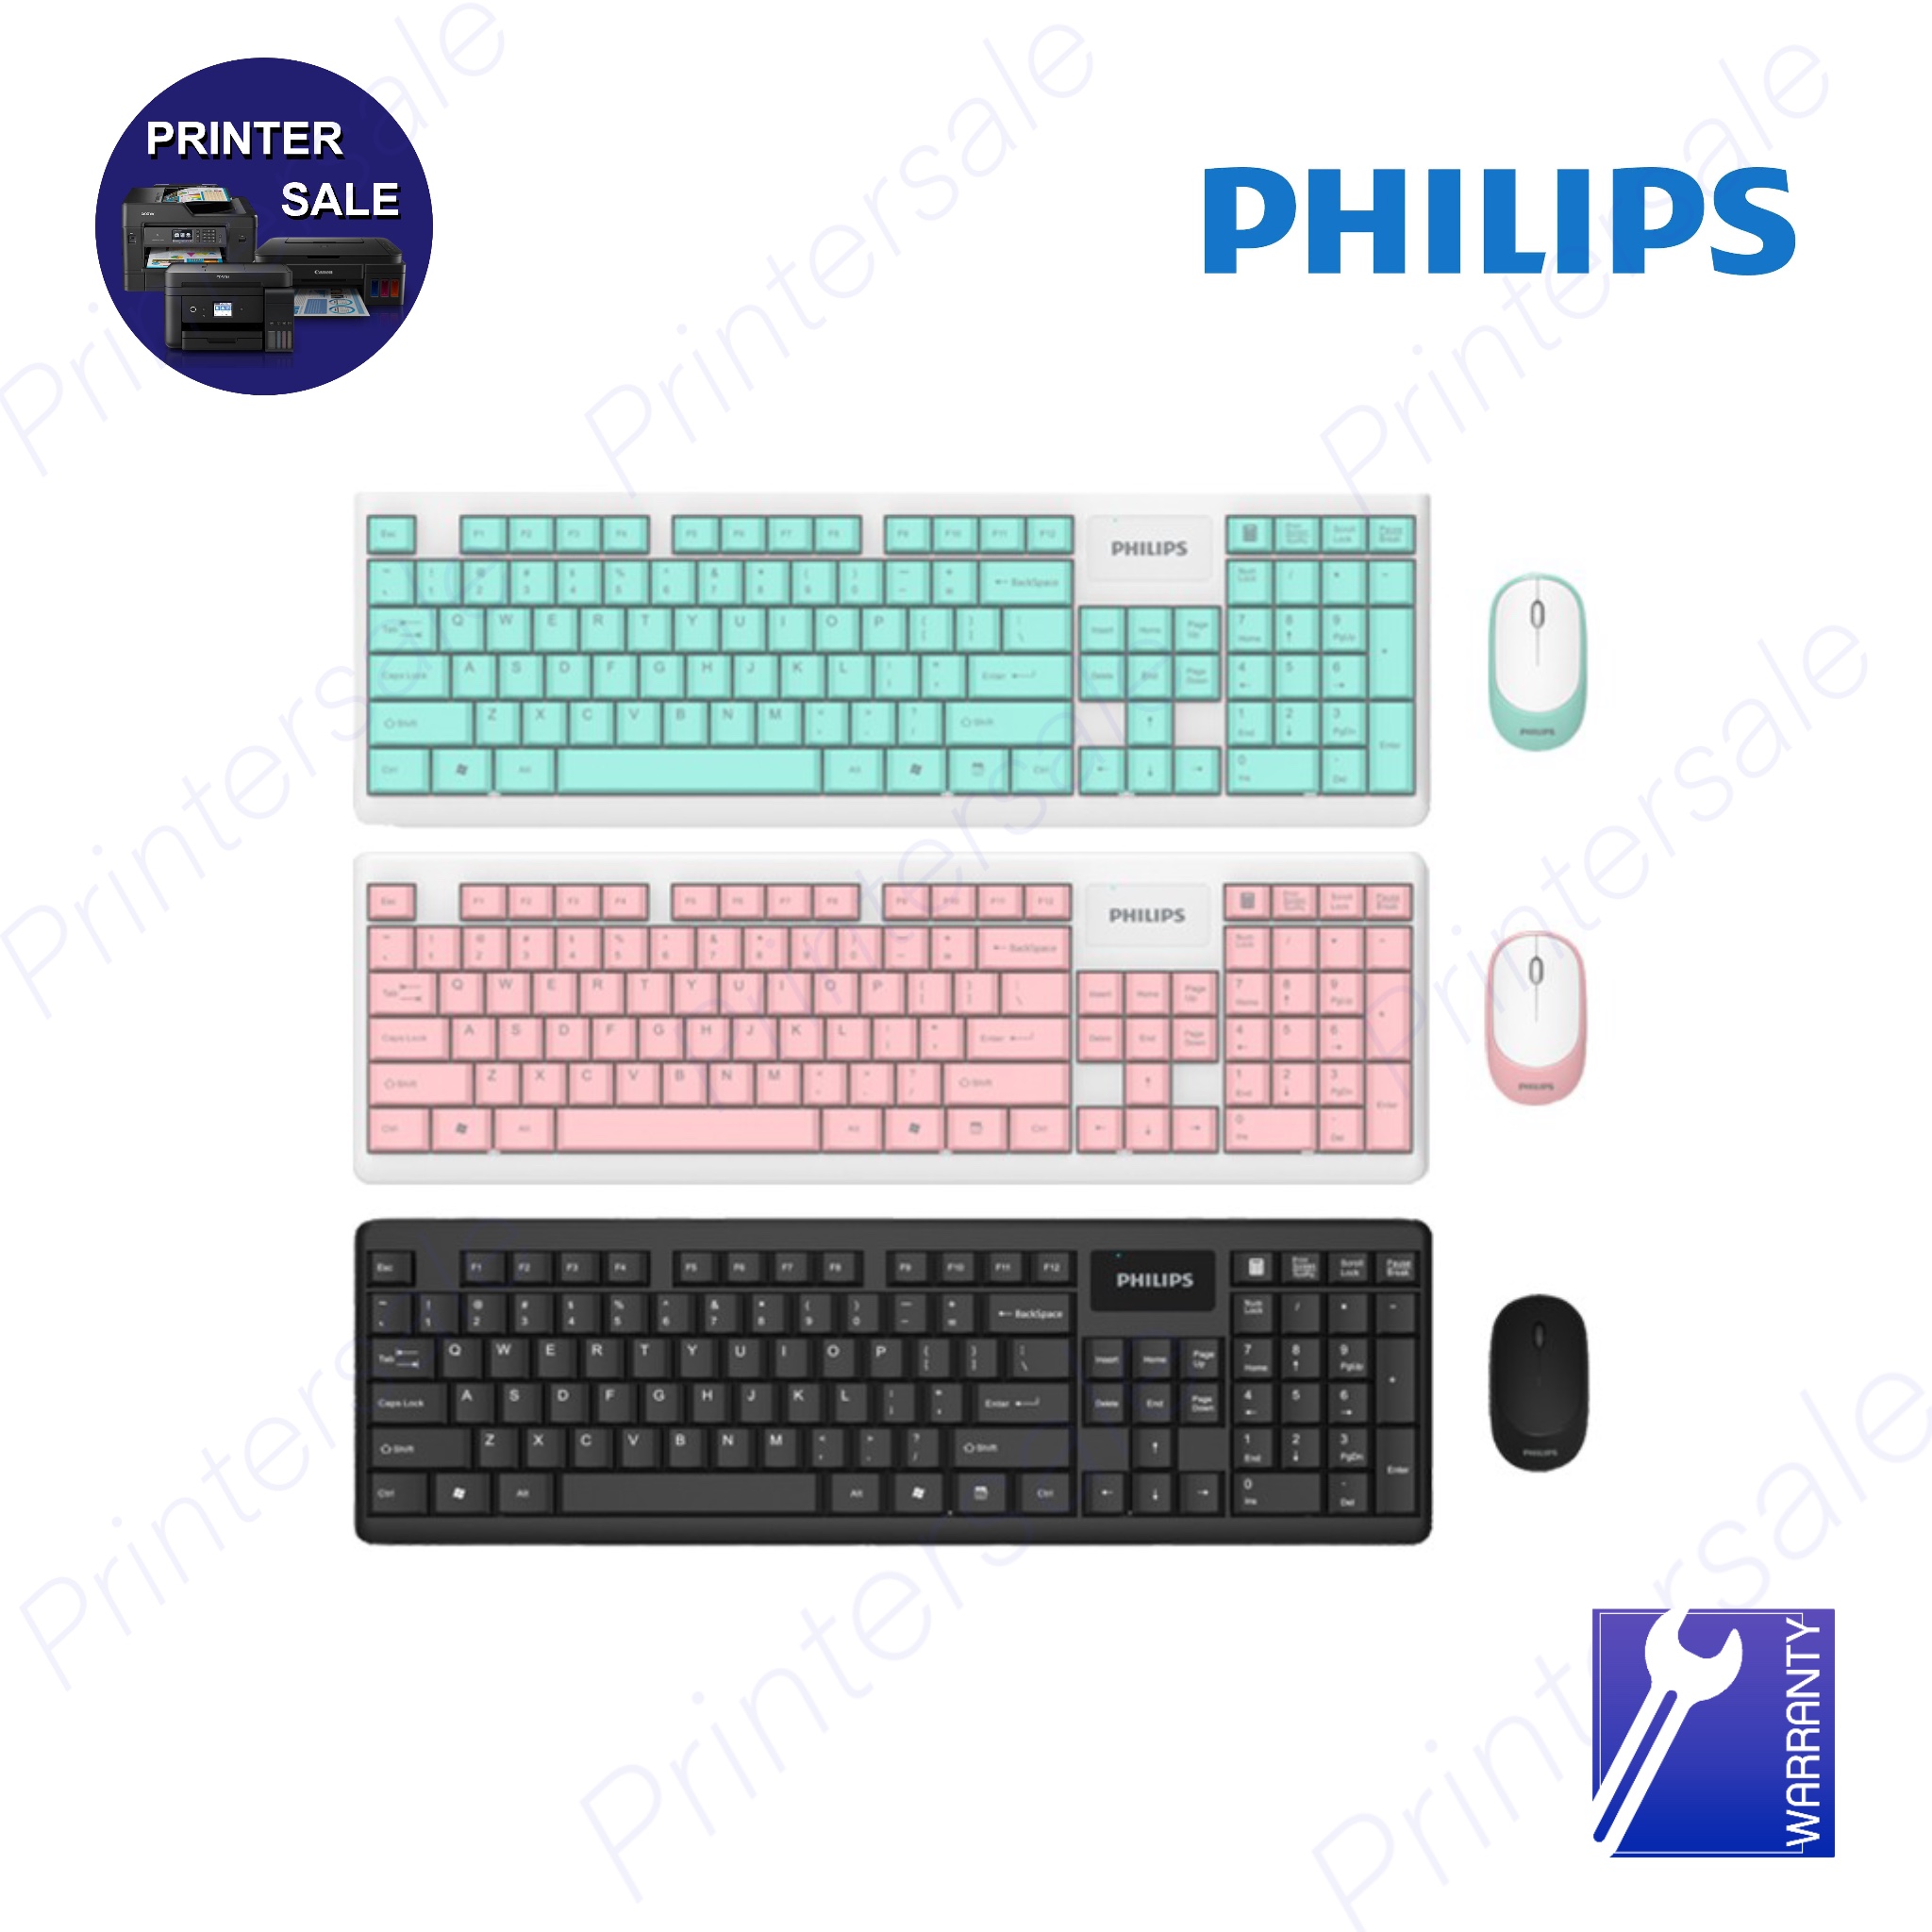 Philips SPT 6314 Wireless keyboard and mouse combo Wirless mouse **ราคาถูกมาก** **มีของพร้อมส่ง**